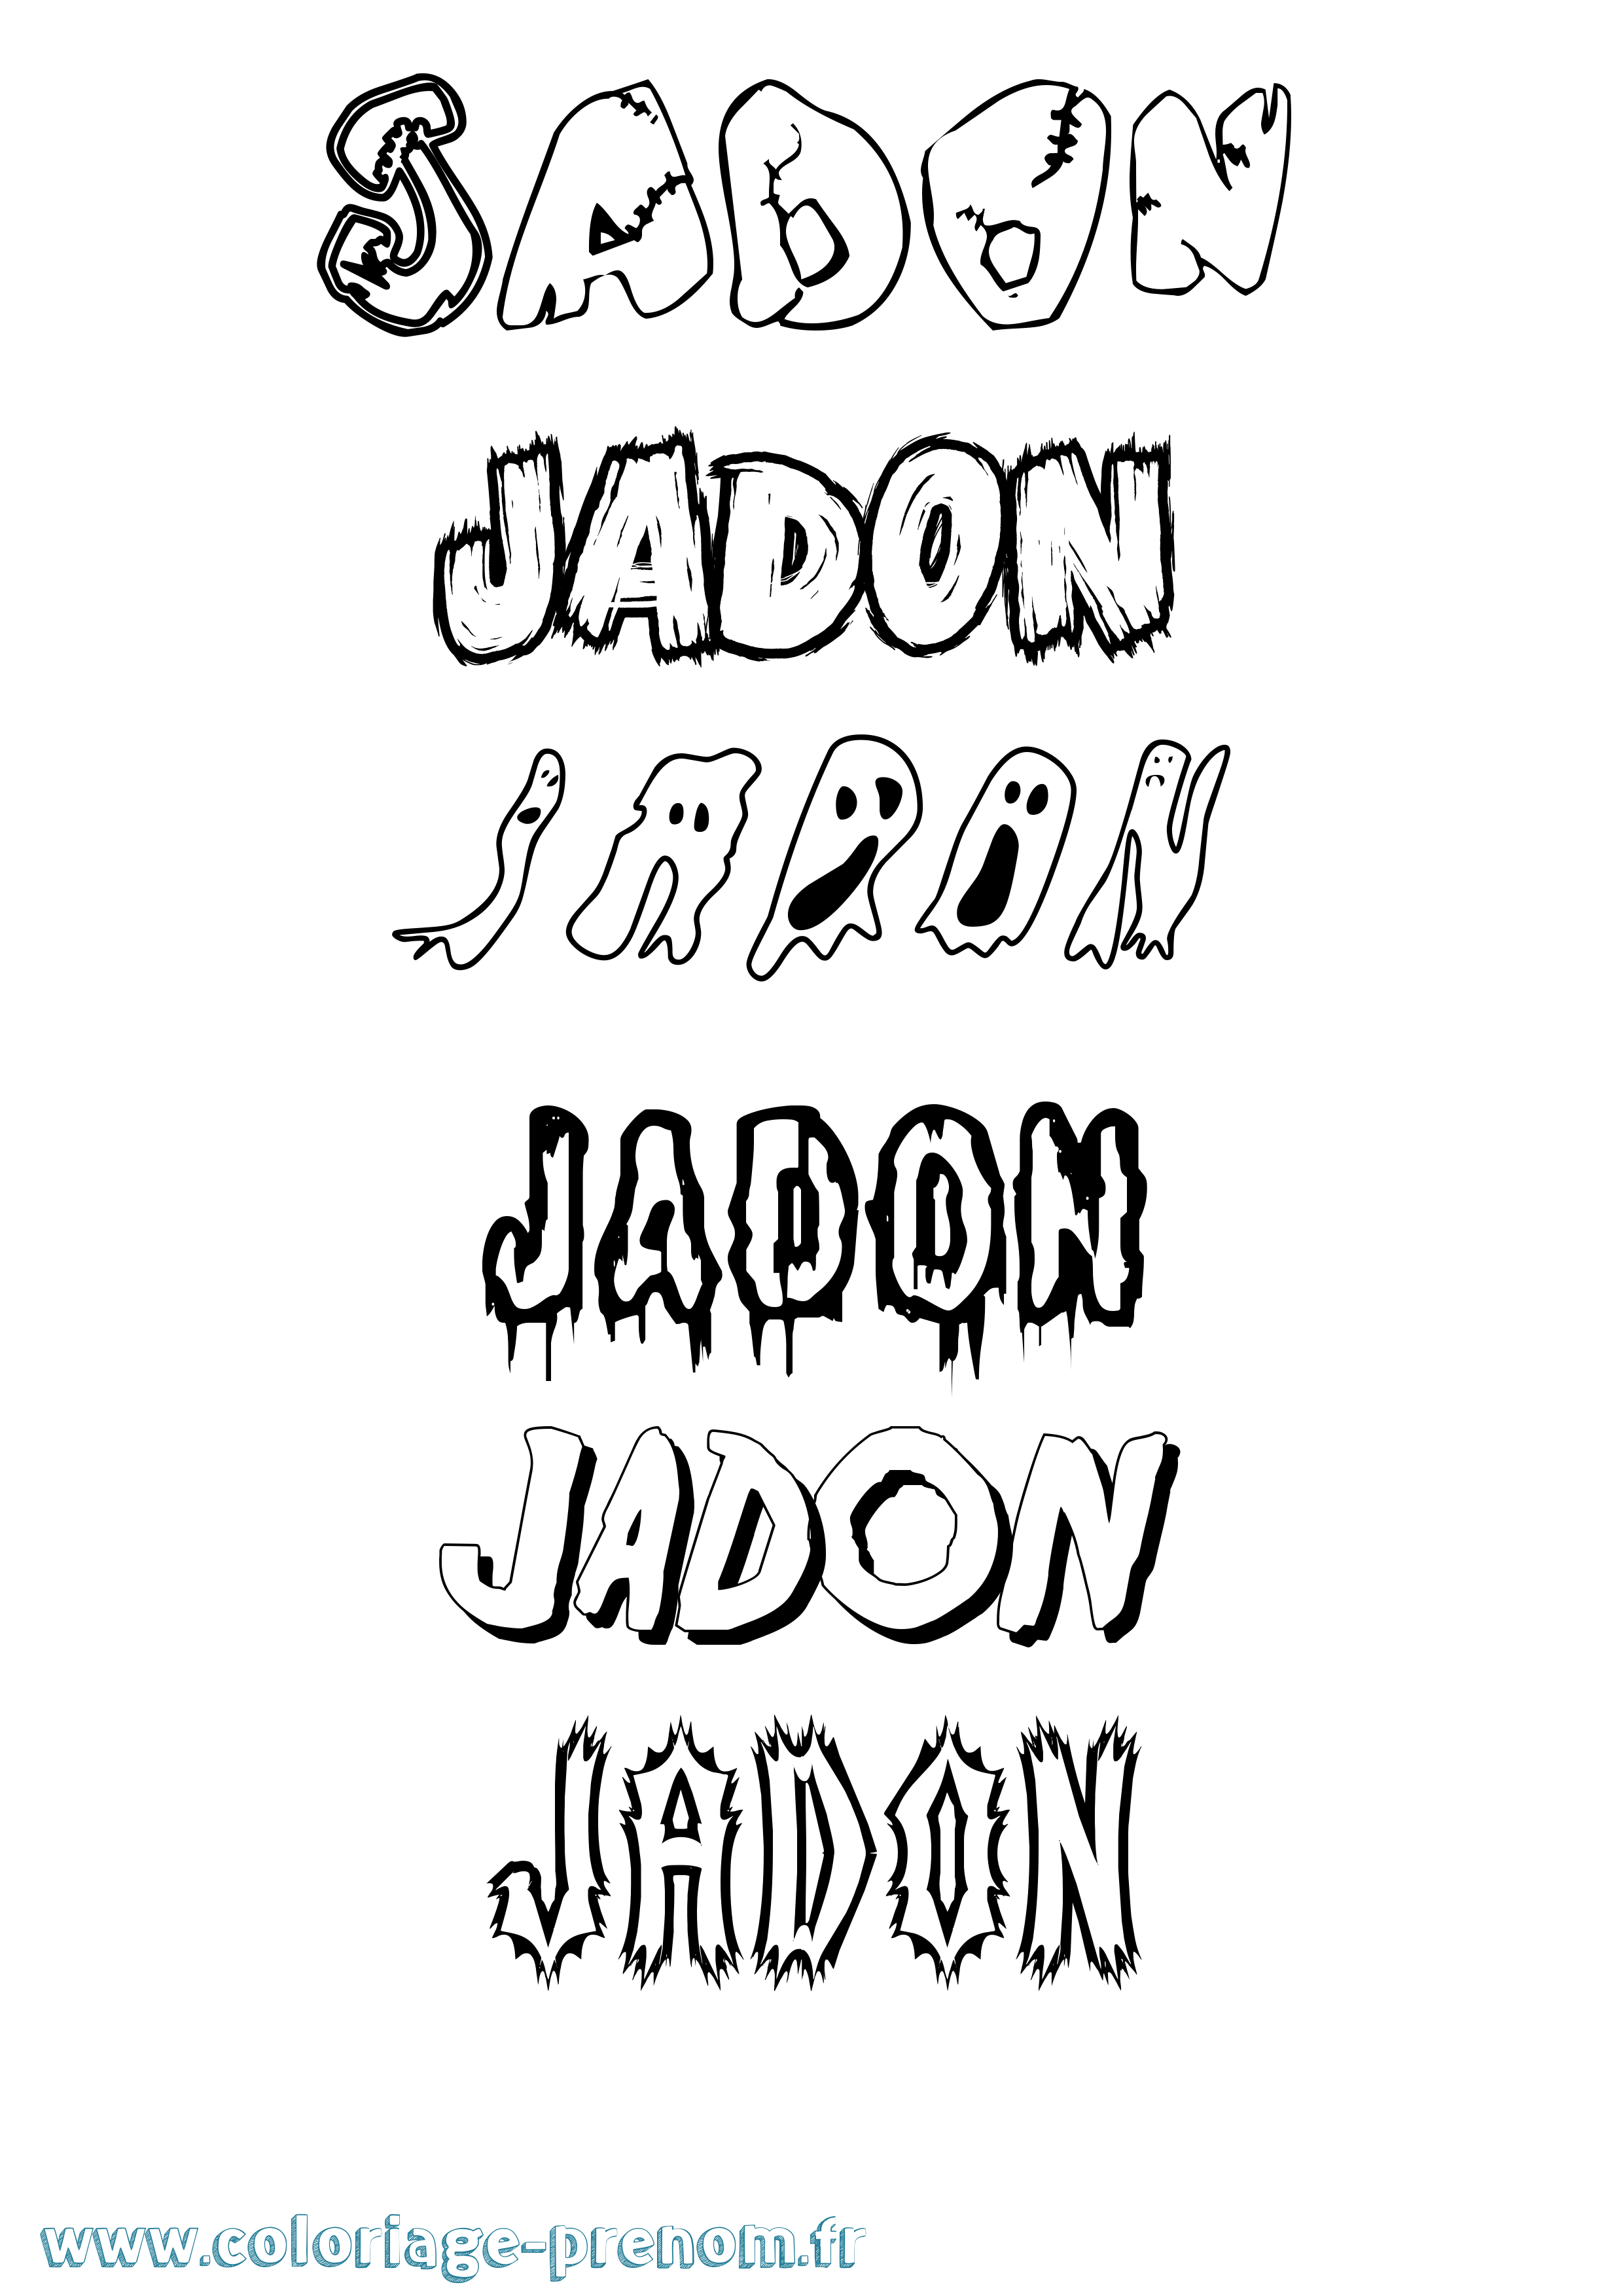 Coloriage prénom Jadon Frisson